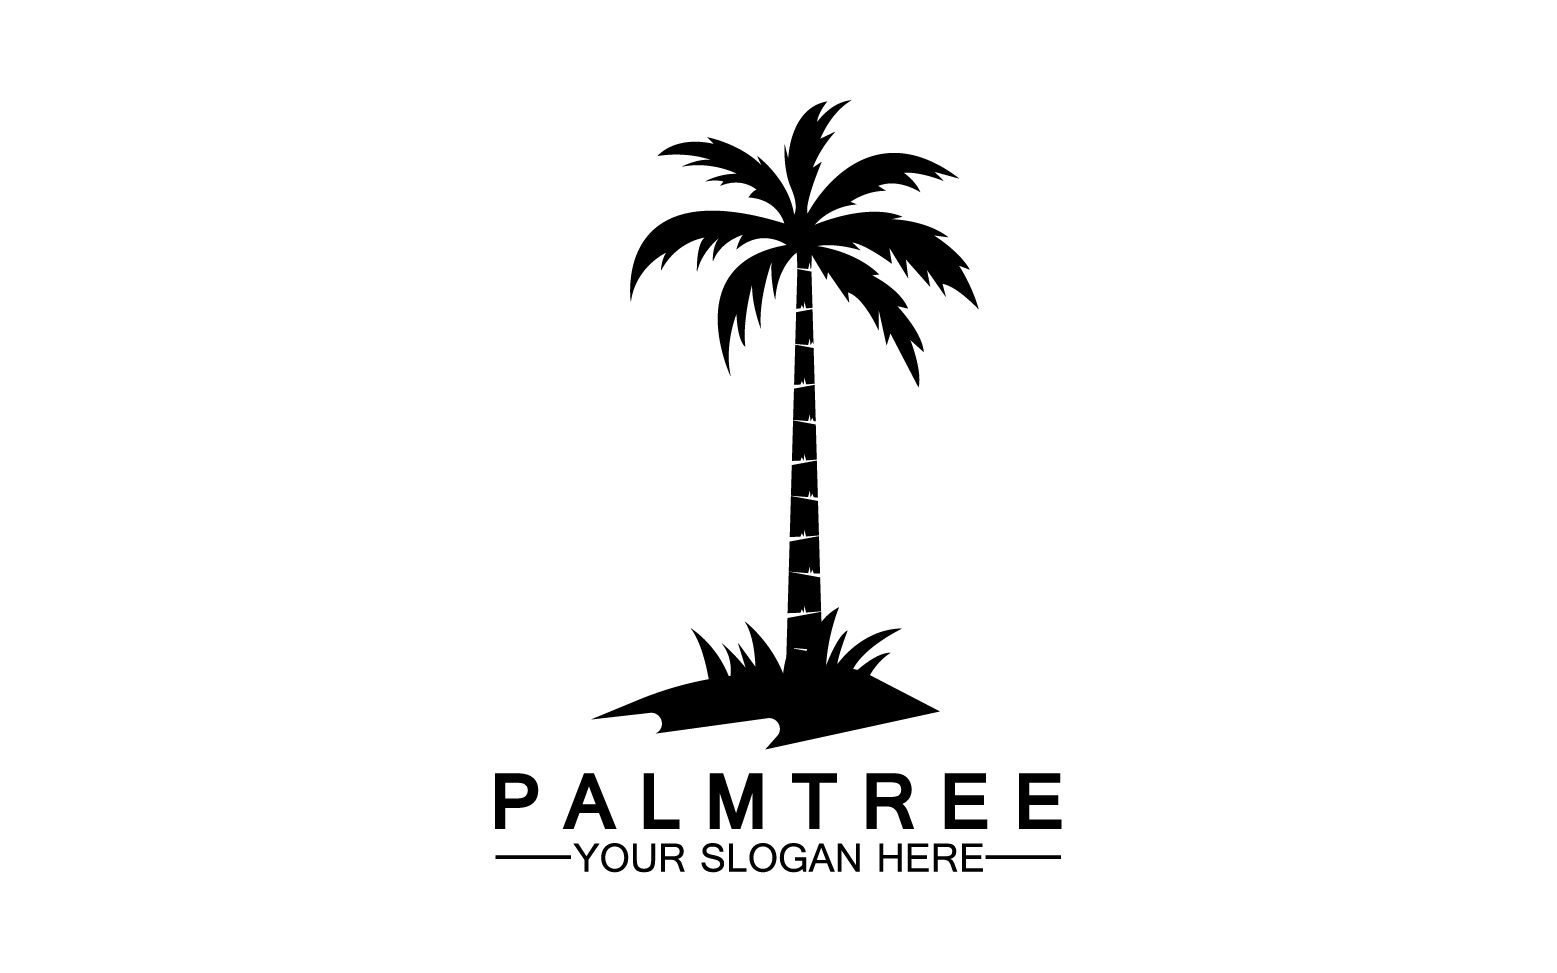 Palm tree hipster vintage logo vector icon illustration v8